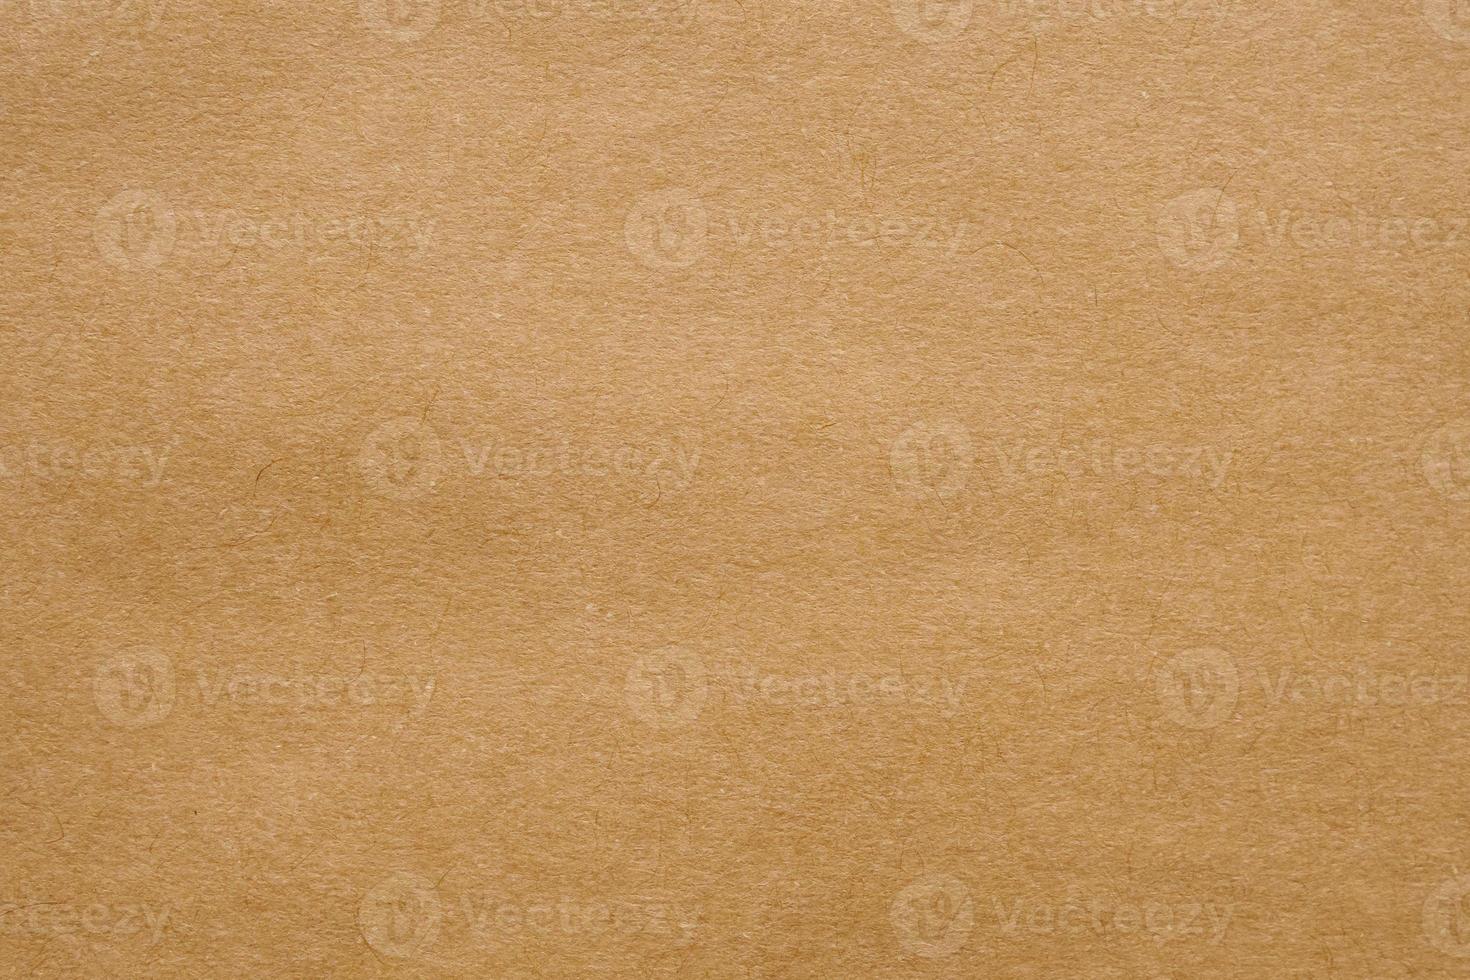 papier brun recyclé feuille kraft texture carton fond photo